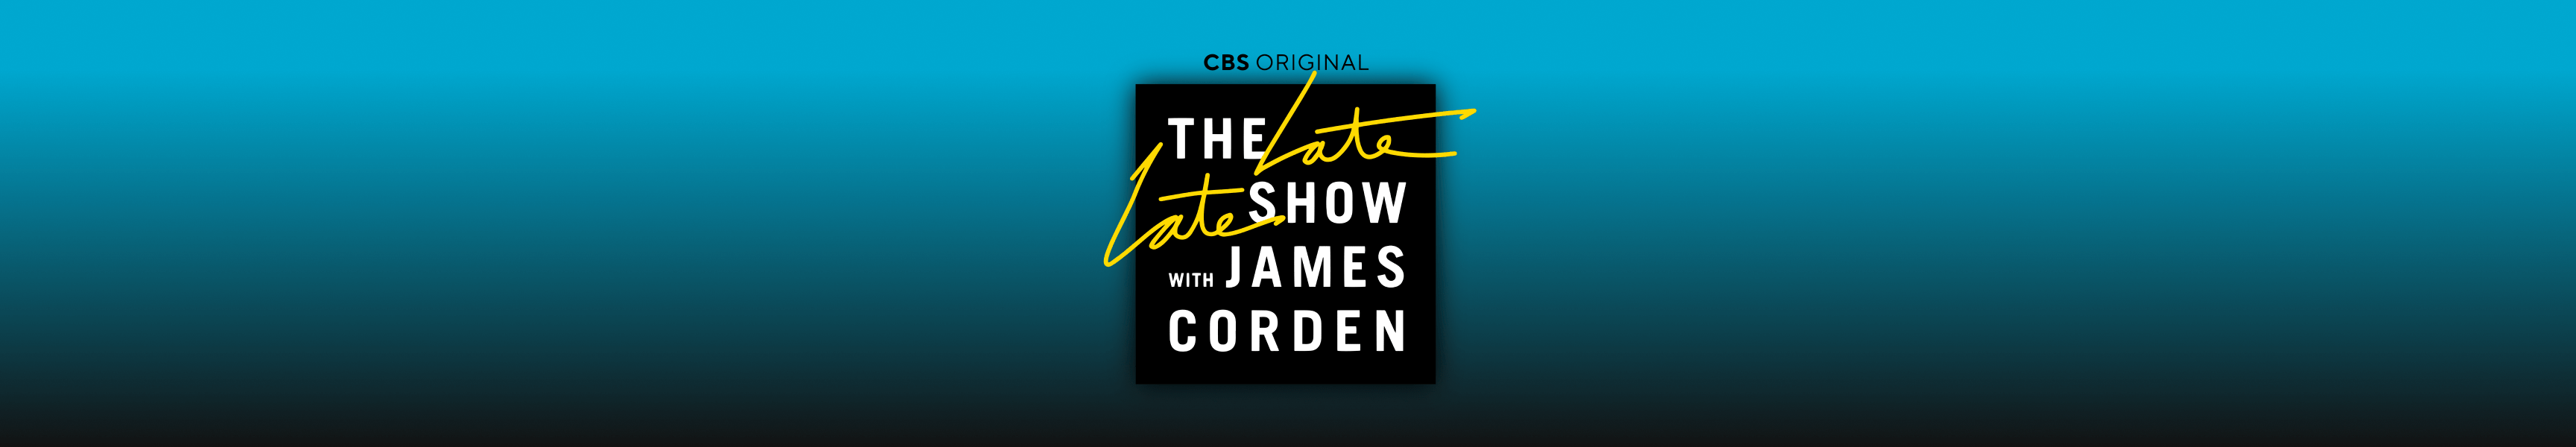 The Late Late Show con James Corden